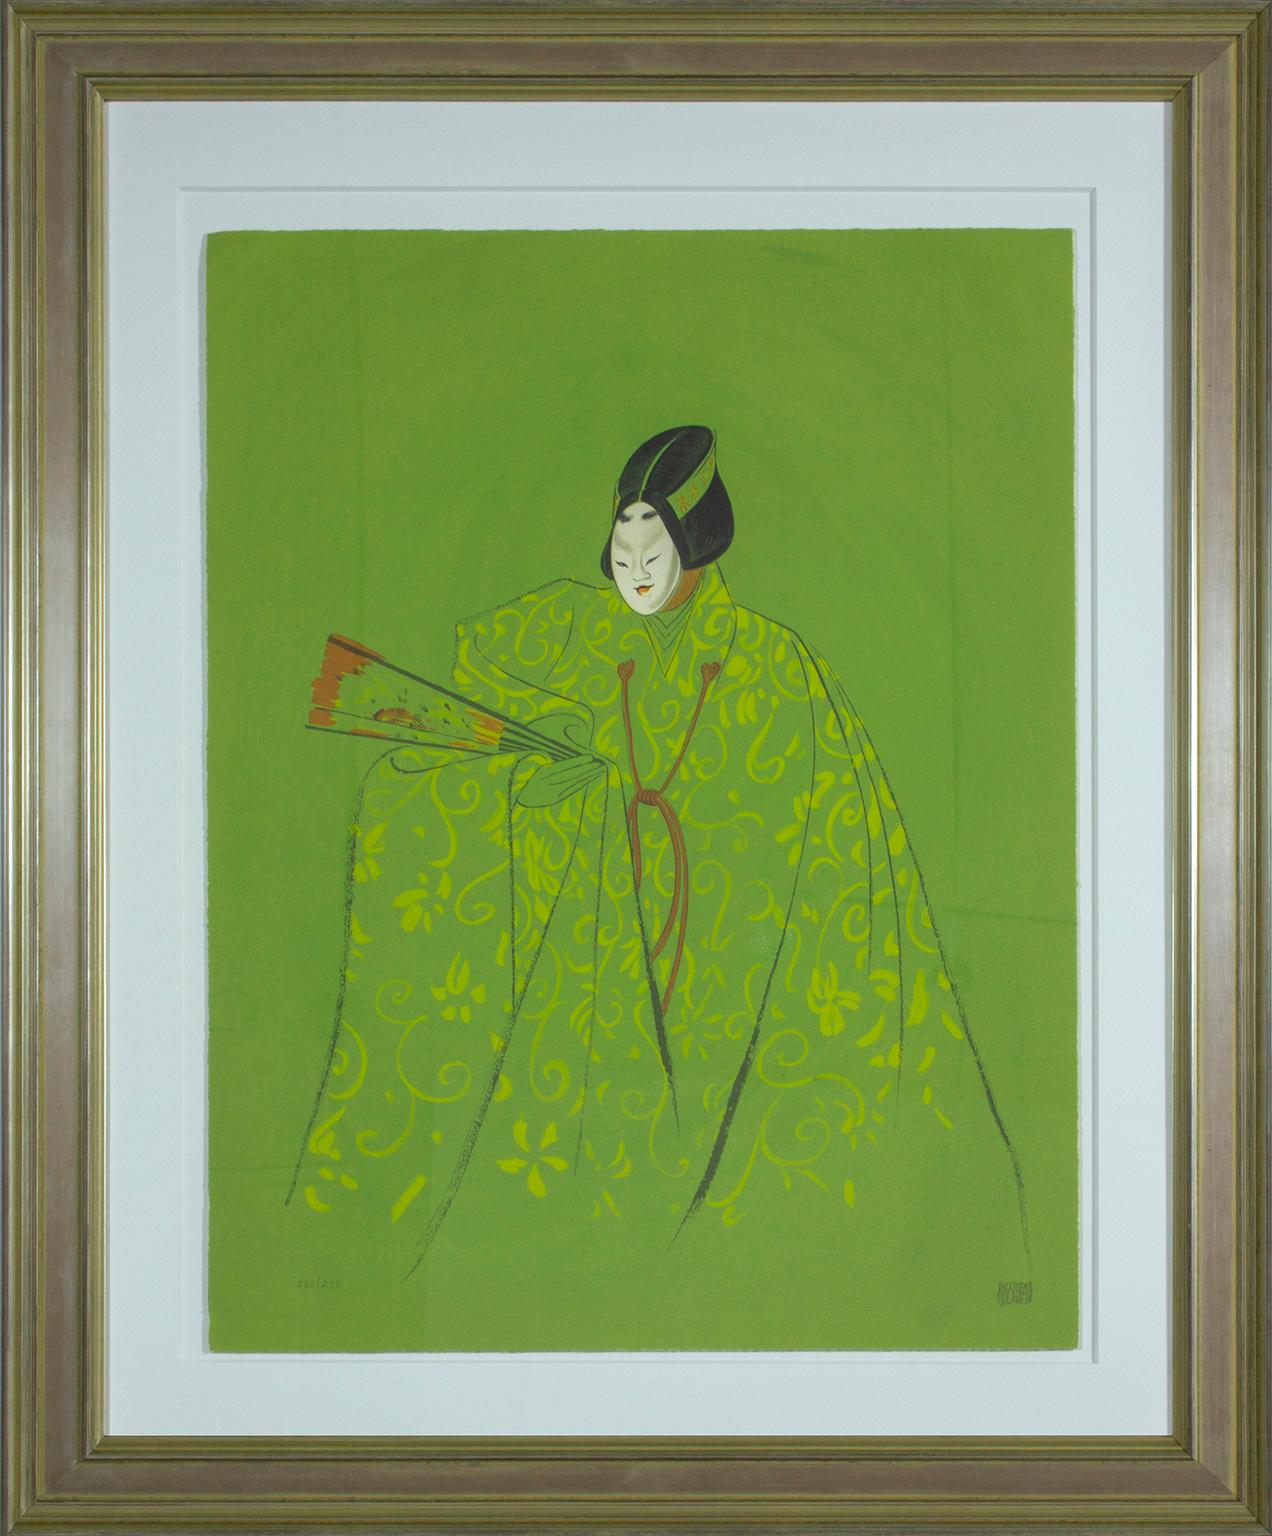 Albert Al Hirschfeld Figurative Print - "Hanjo" framed, hand-signed lithograph from 1976 "Kabuki Suite" by Al Hirschfeld